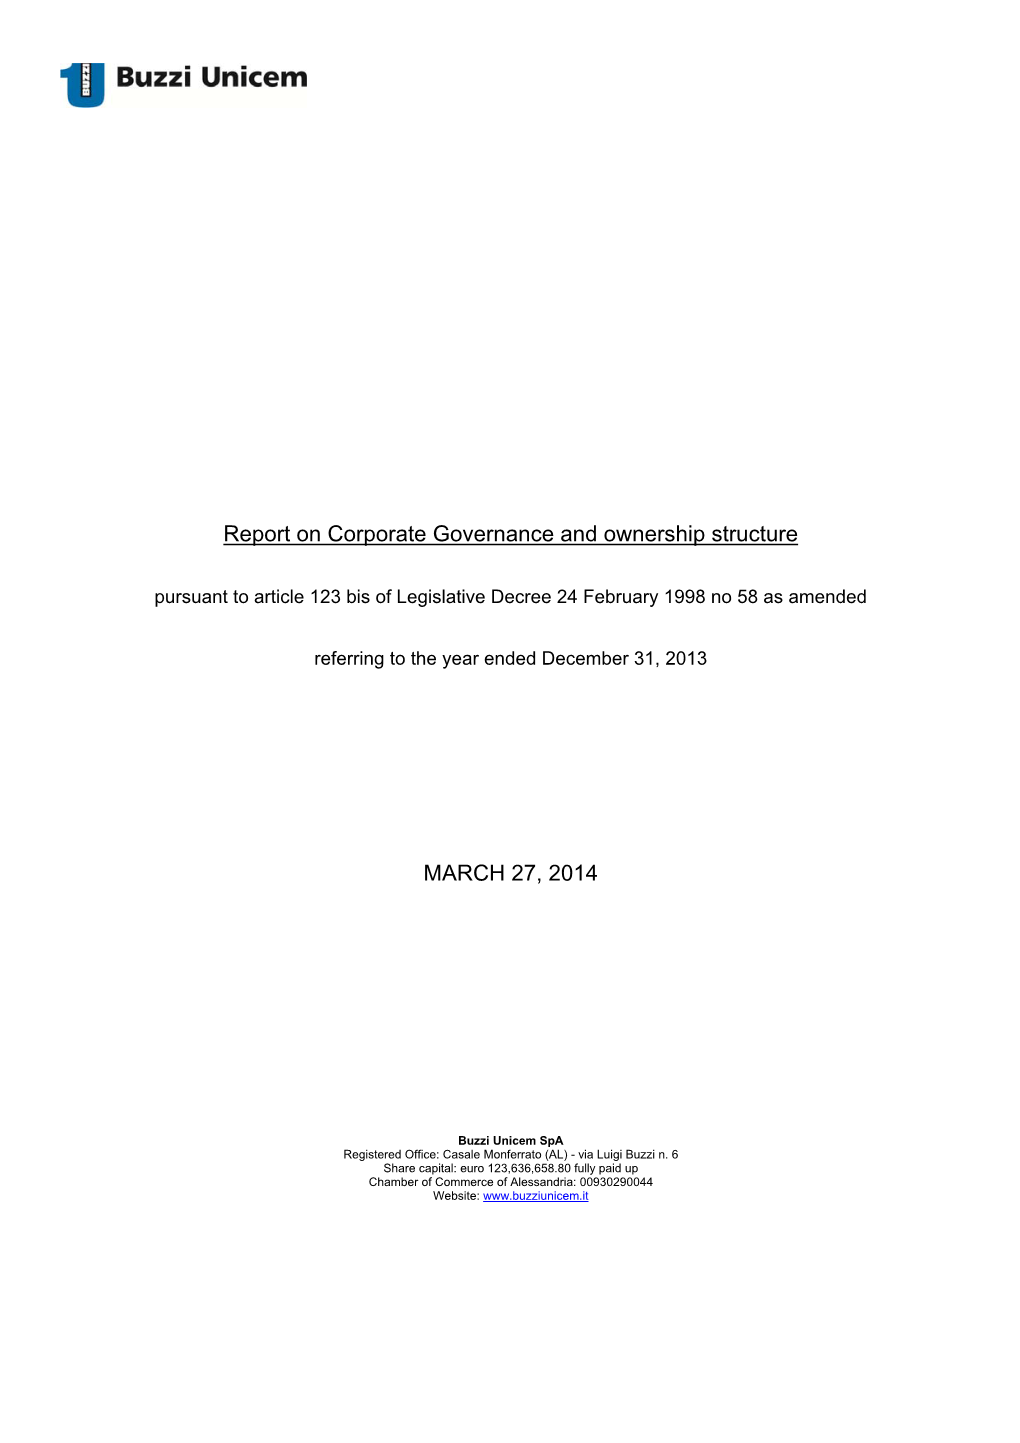 Report on Corporate Governance 2013